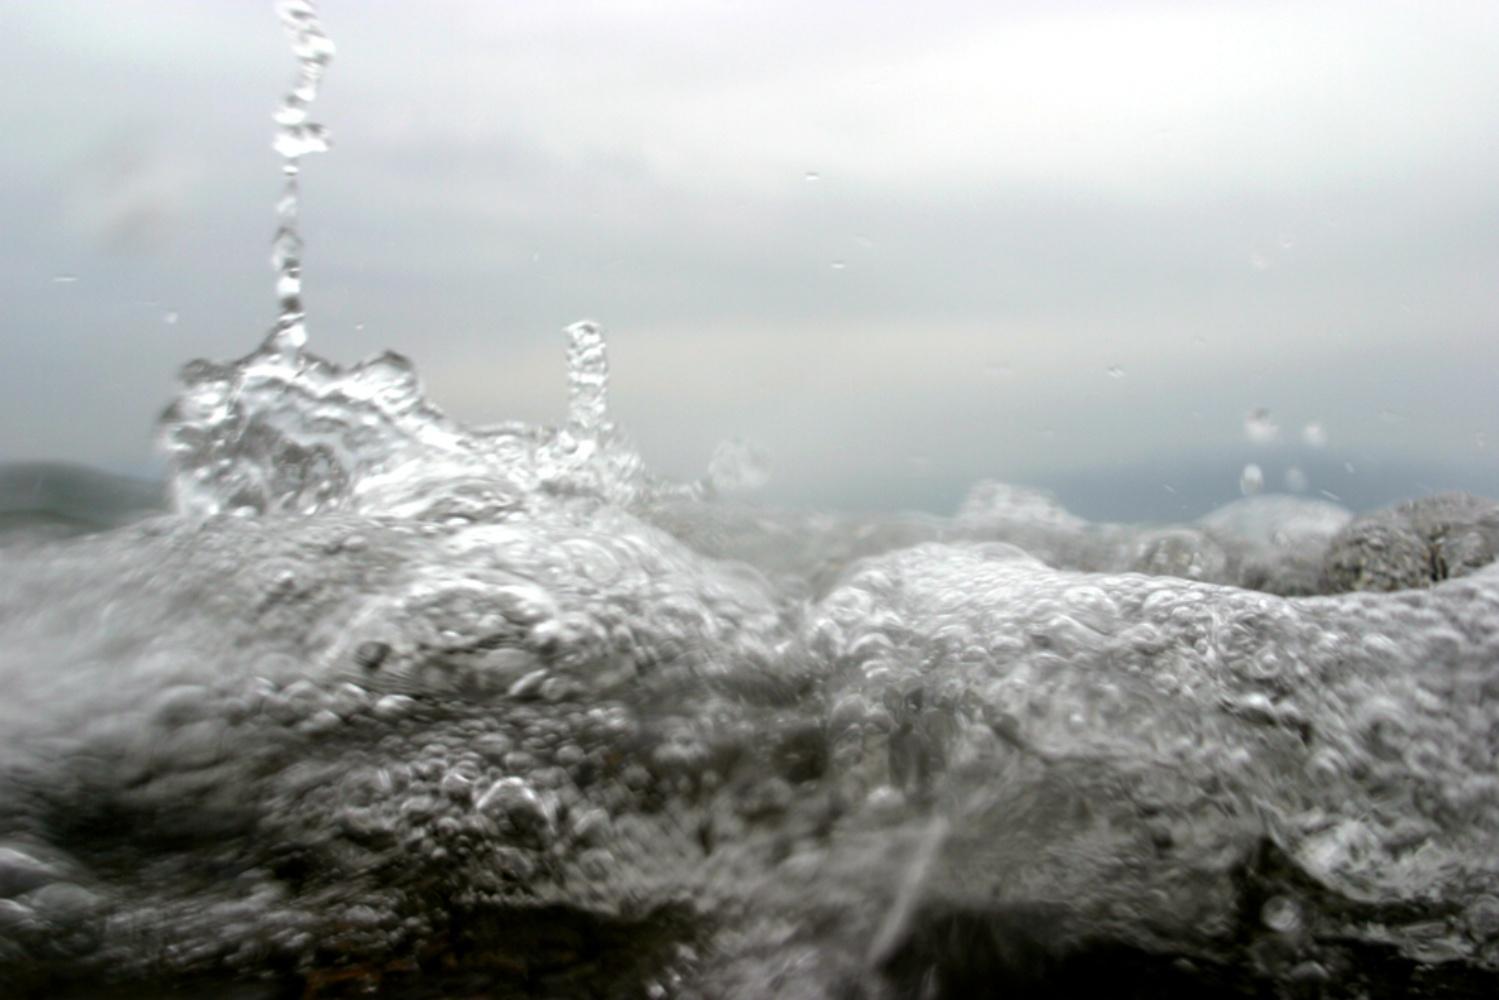 NAMI_009 – Syoin Kajii, Japanese Photography, Ocean, Waves, Water, Nature, Art